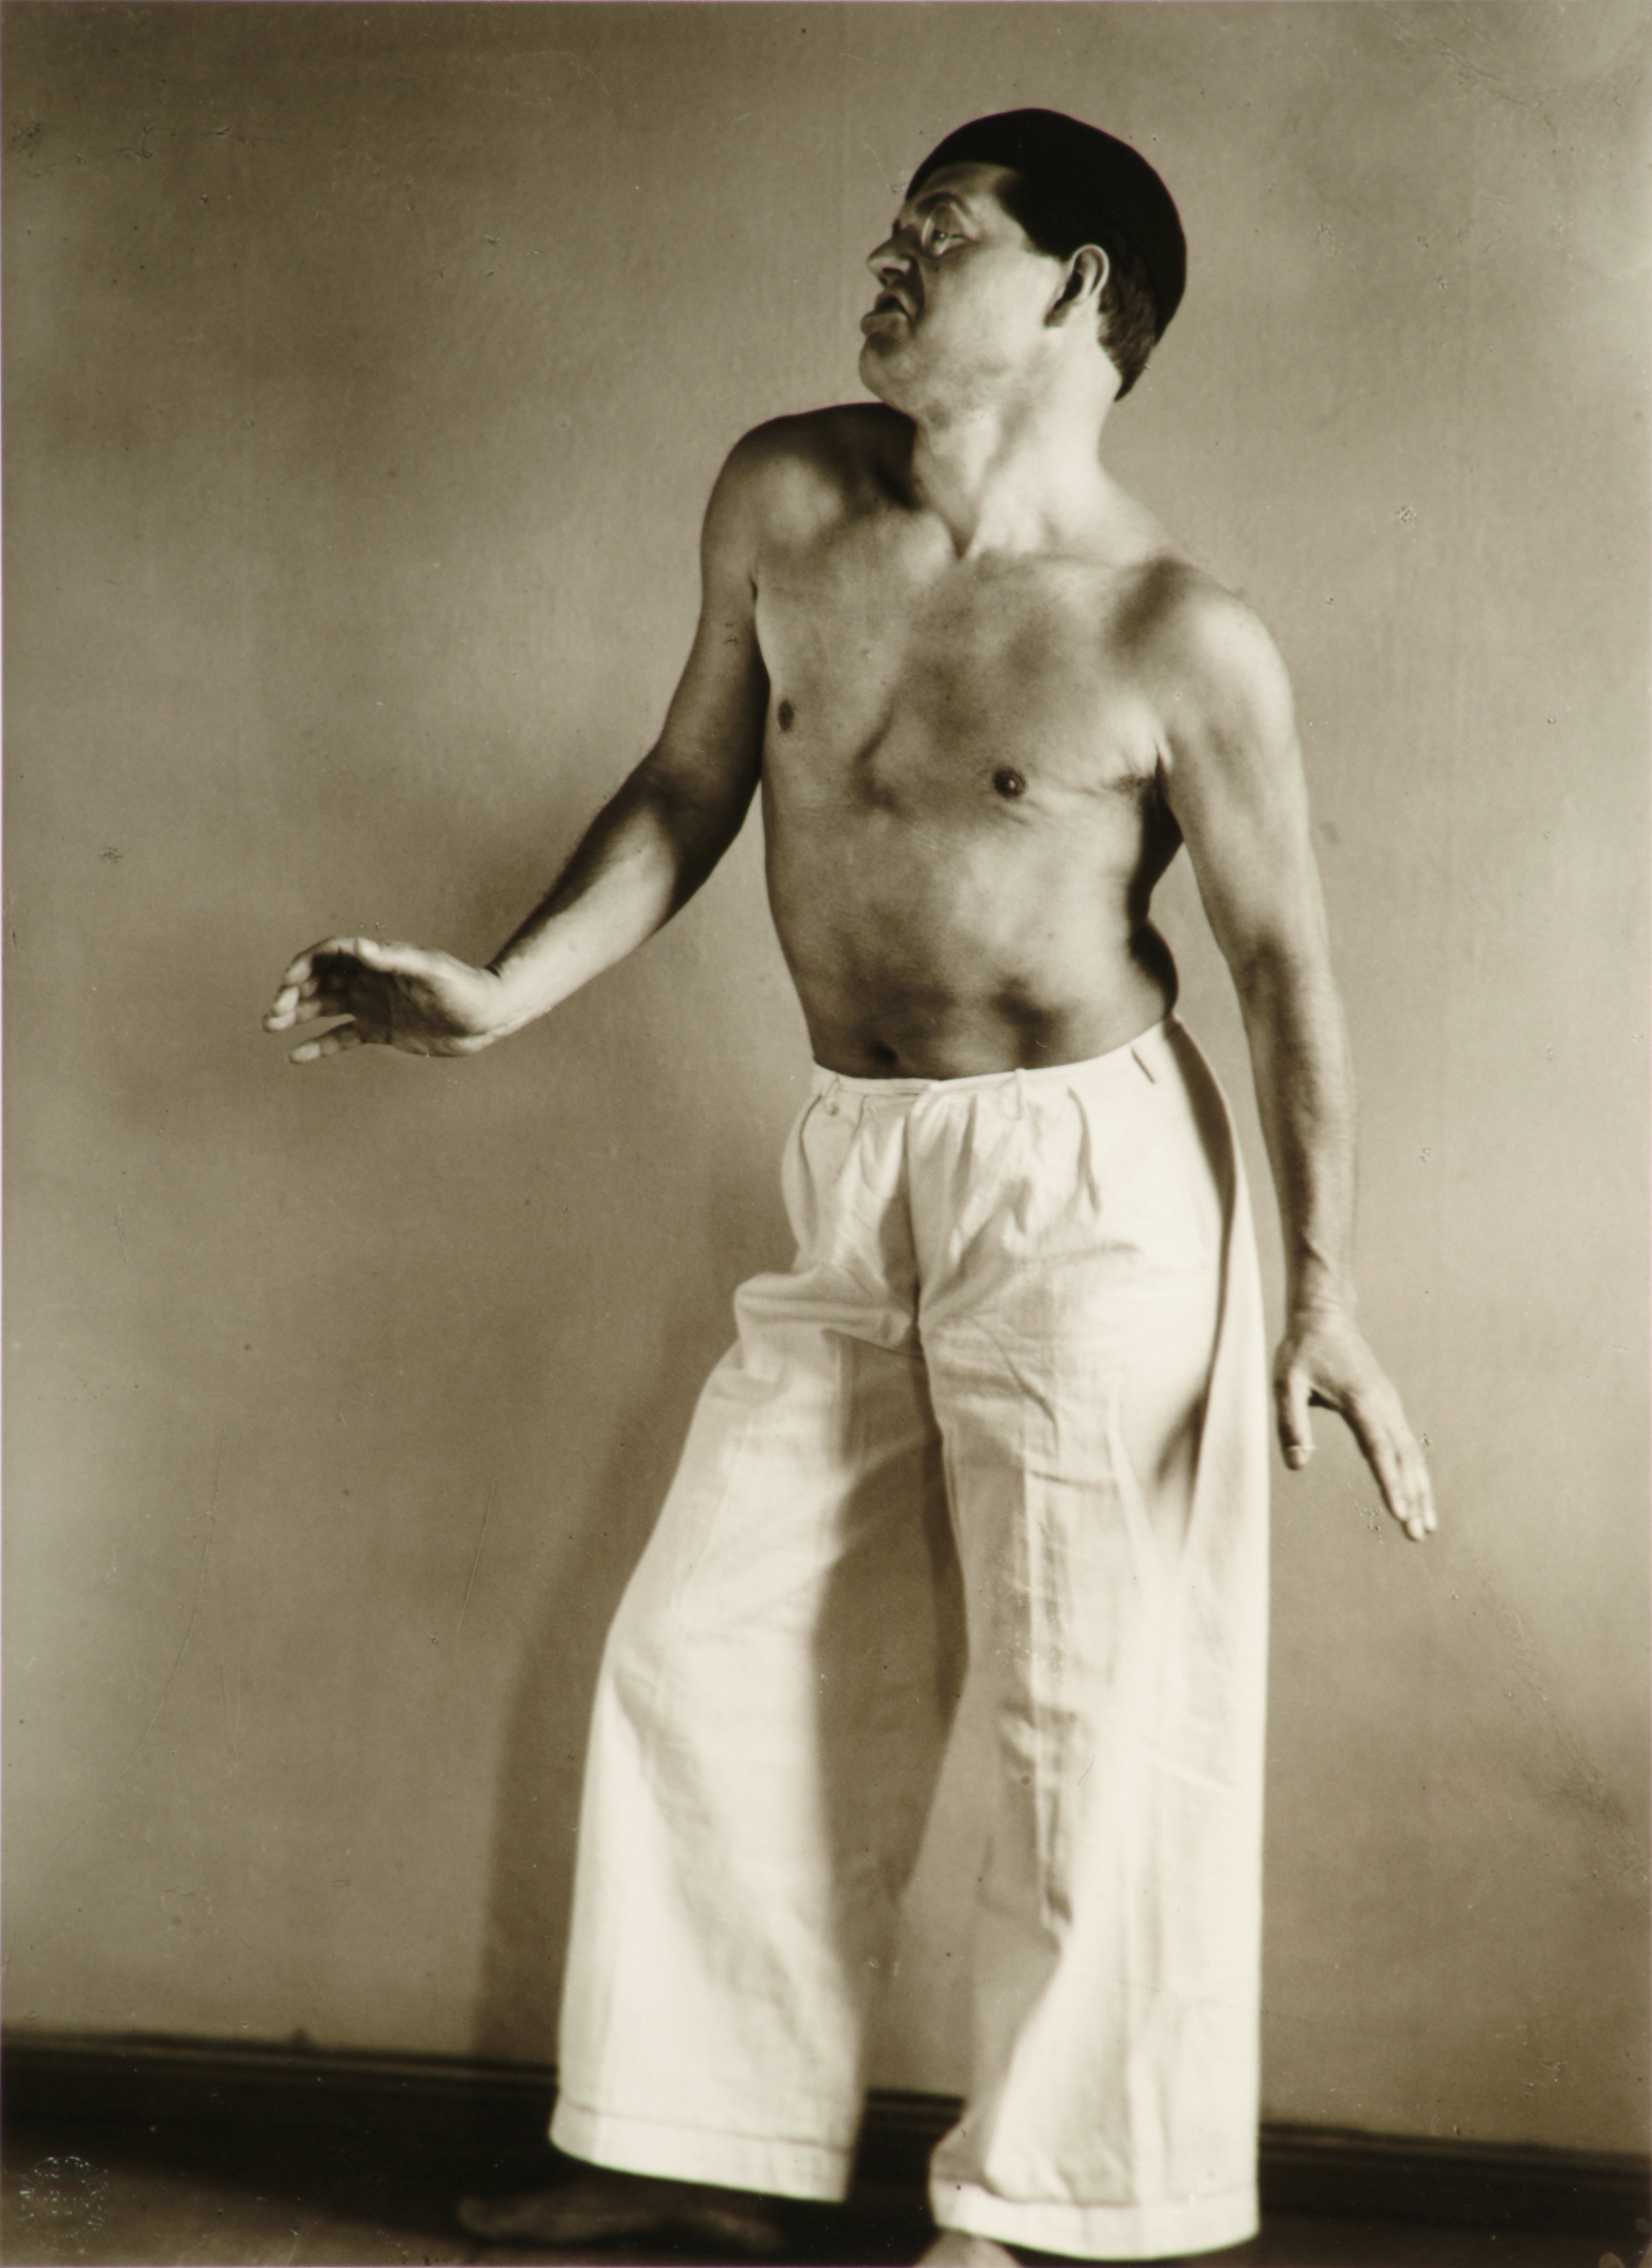 The Dadaist Raoul Hausmann, posing